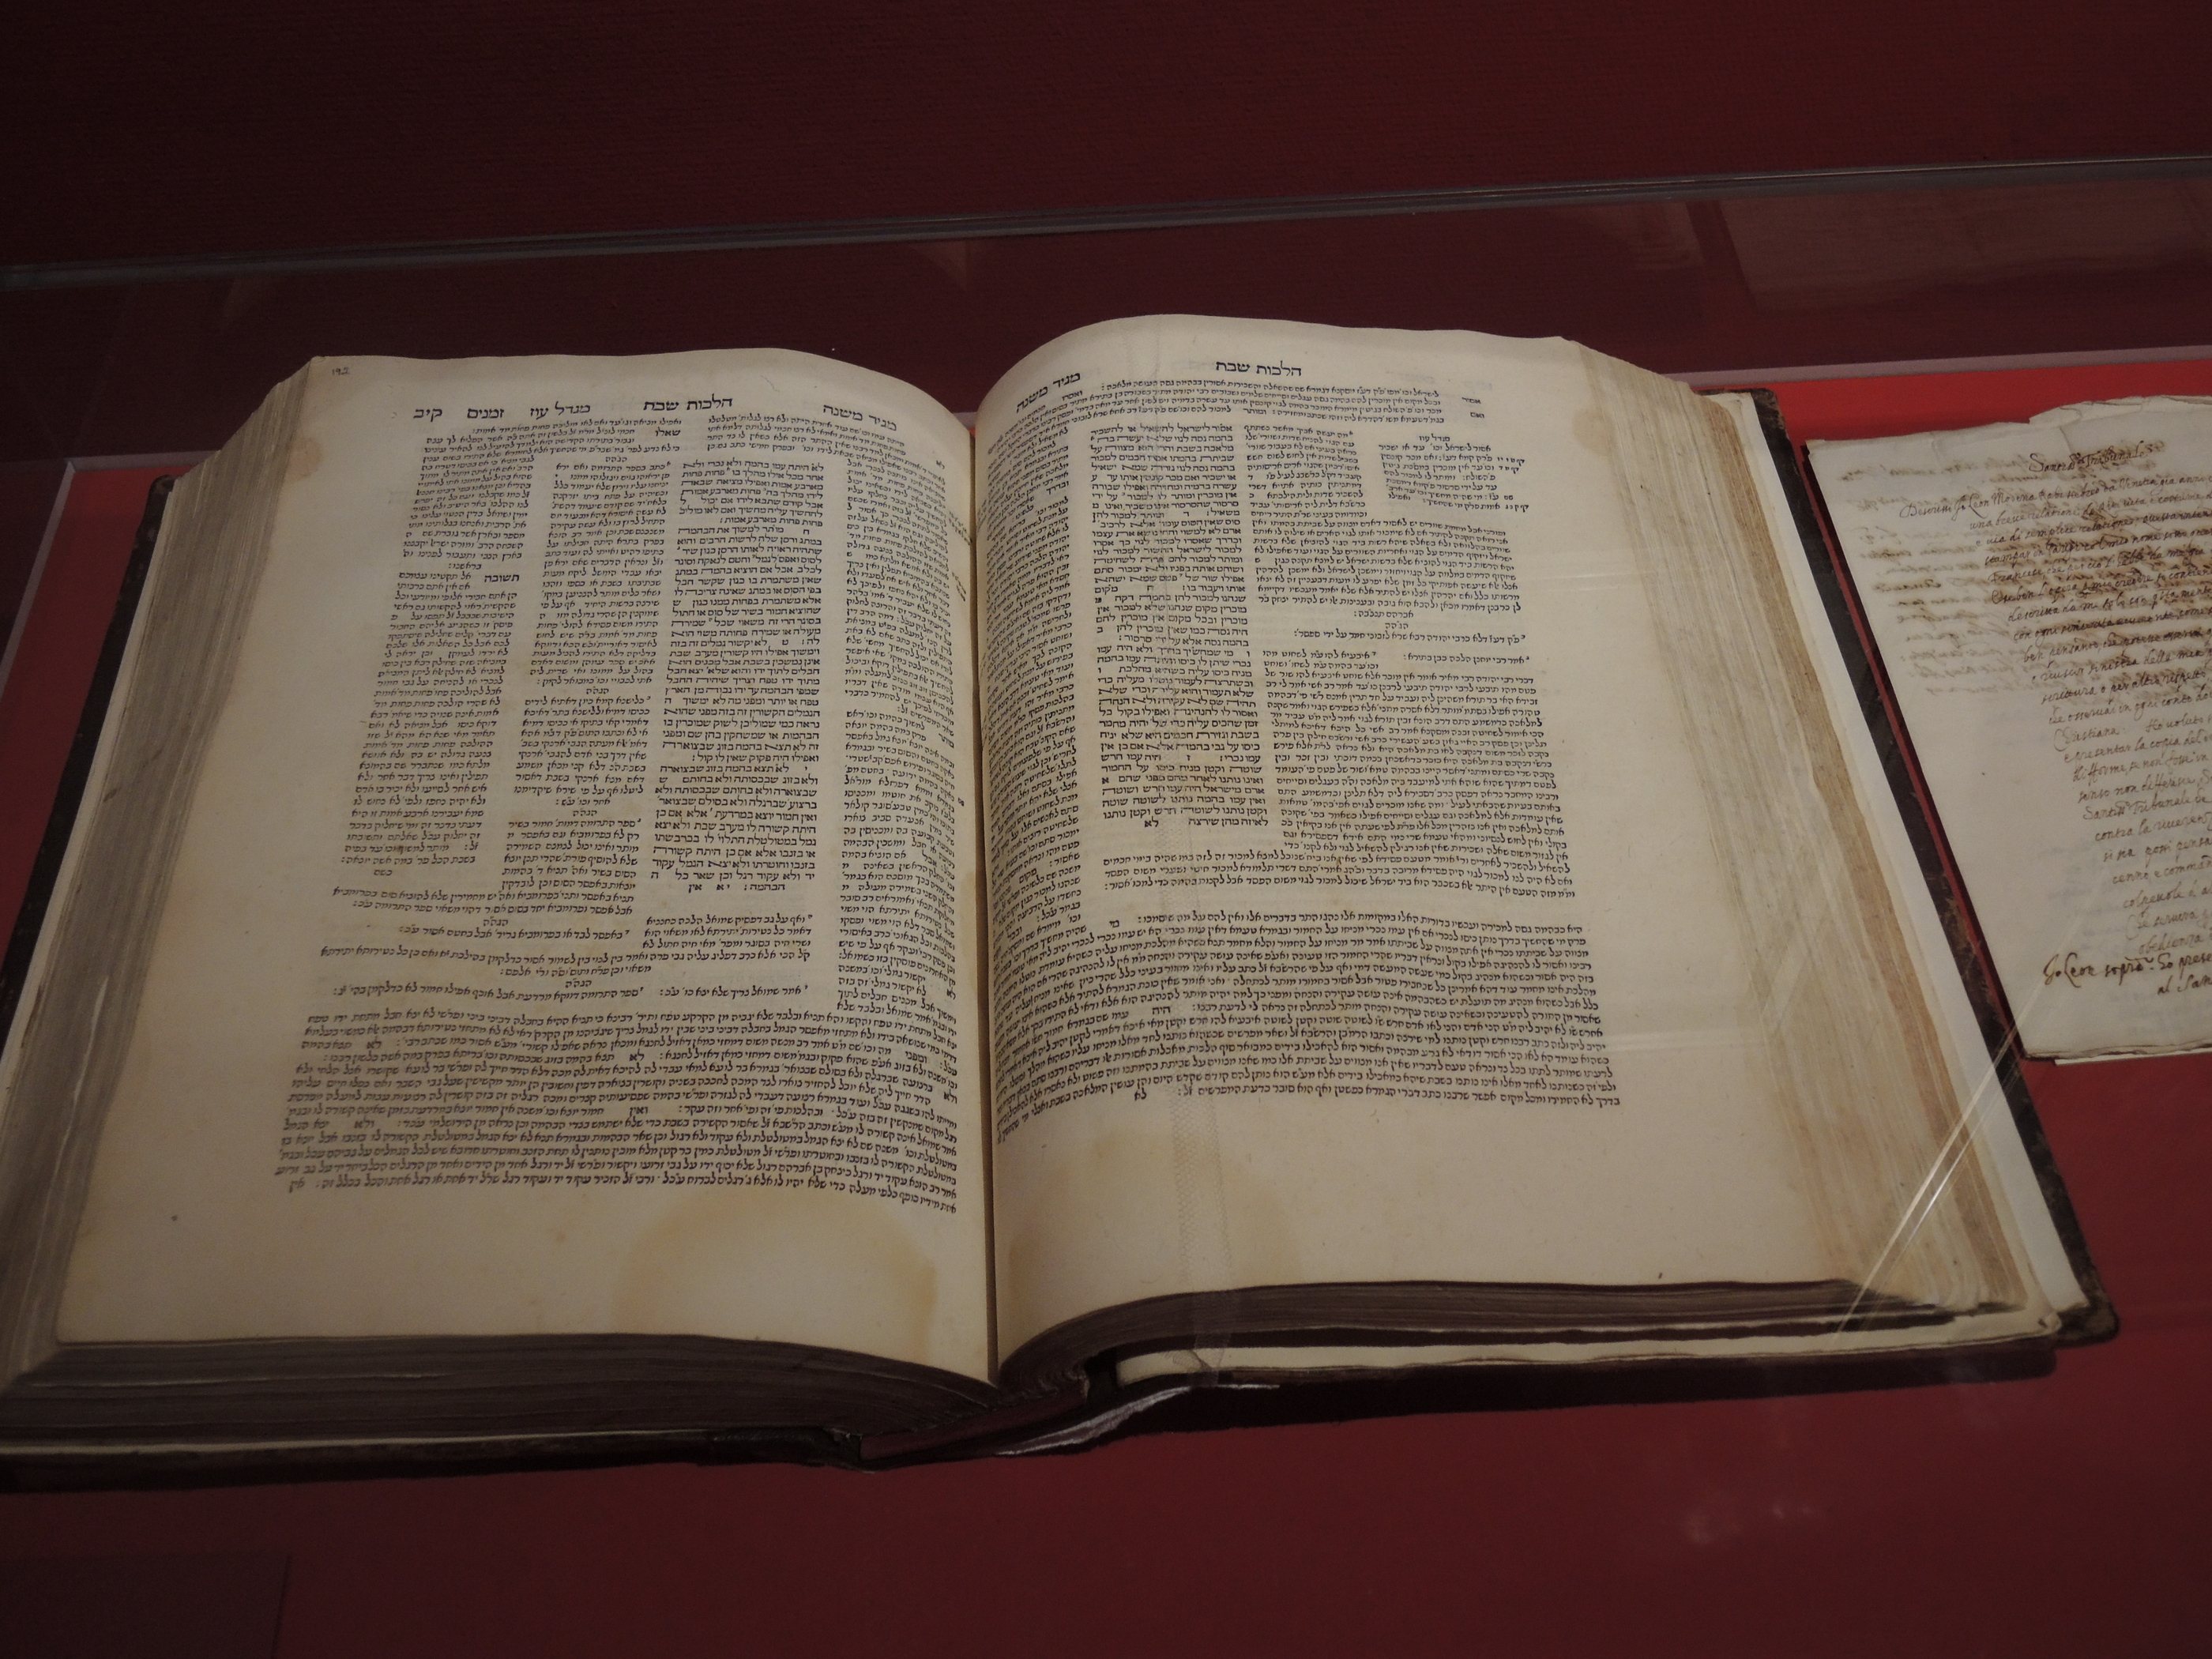 Miamonides Mishneh Torah published in Venice 1551